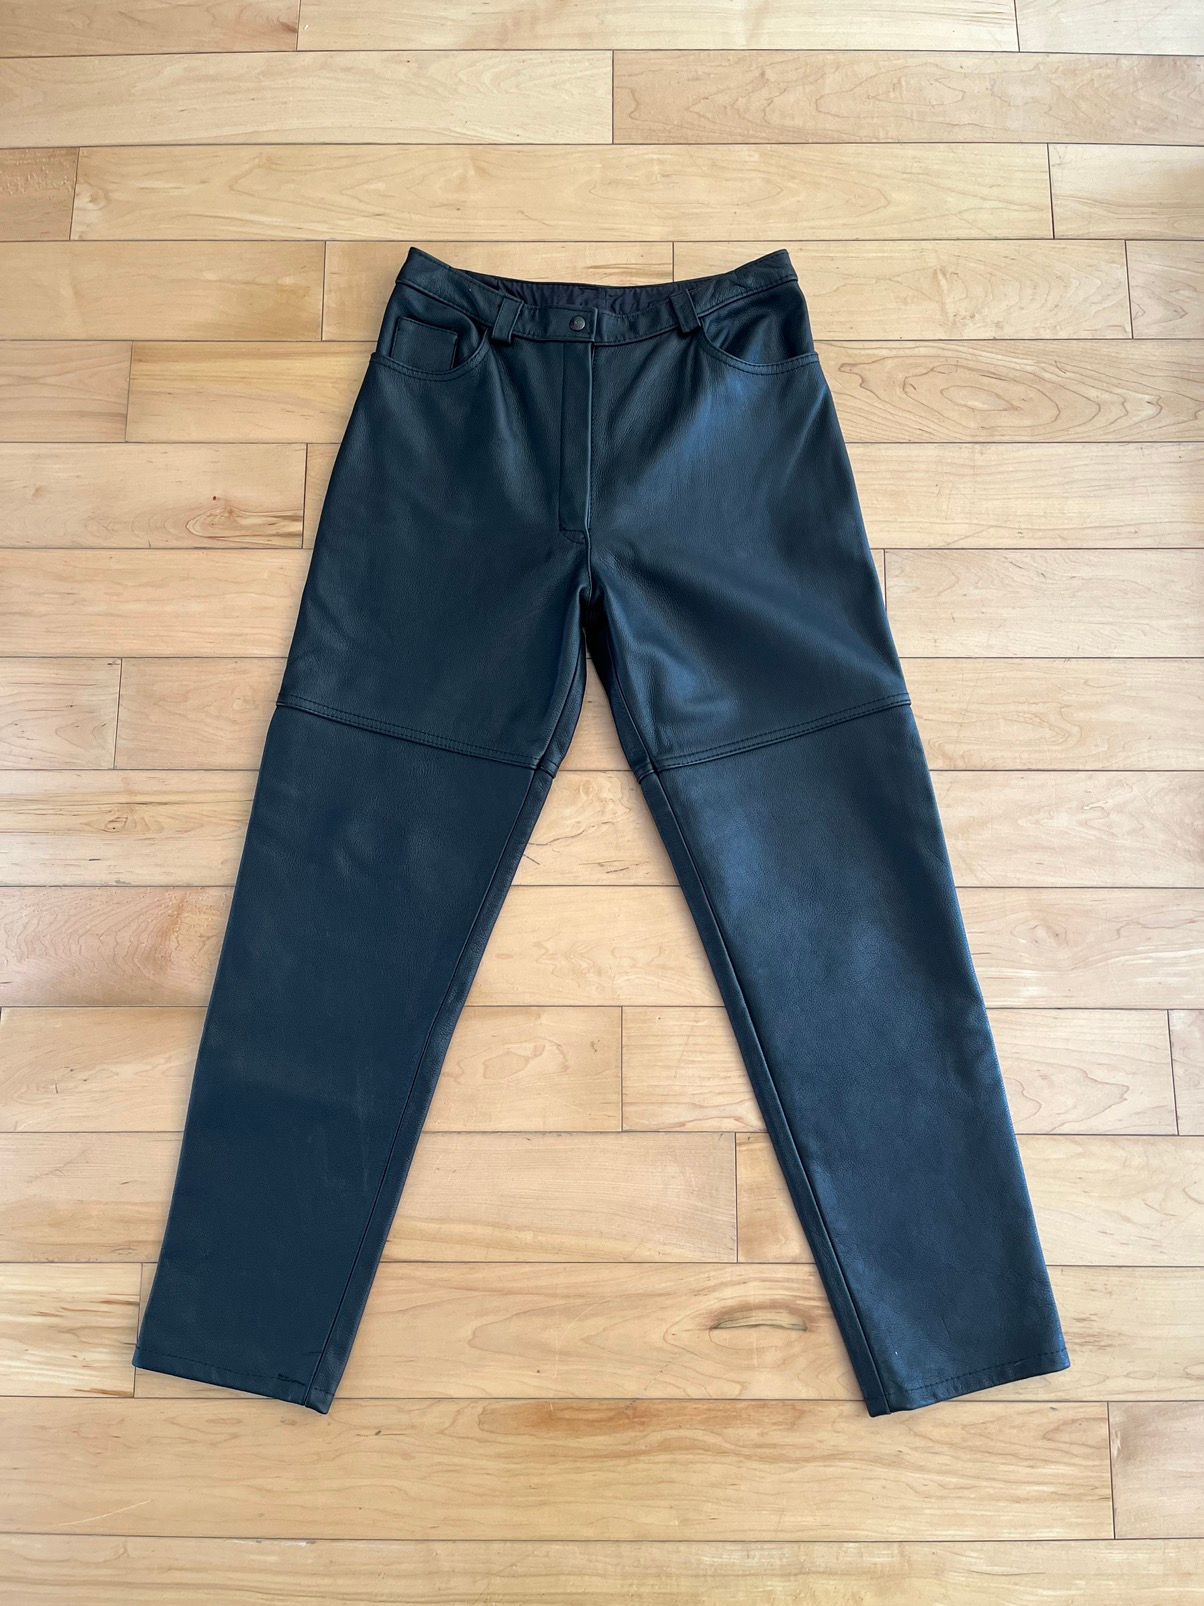 Vintage - Angora Leather Motorcycle pants - 1